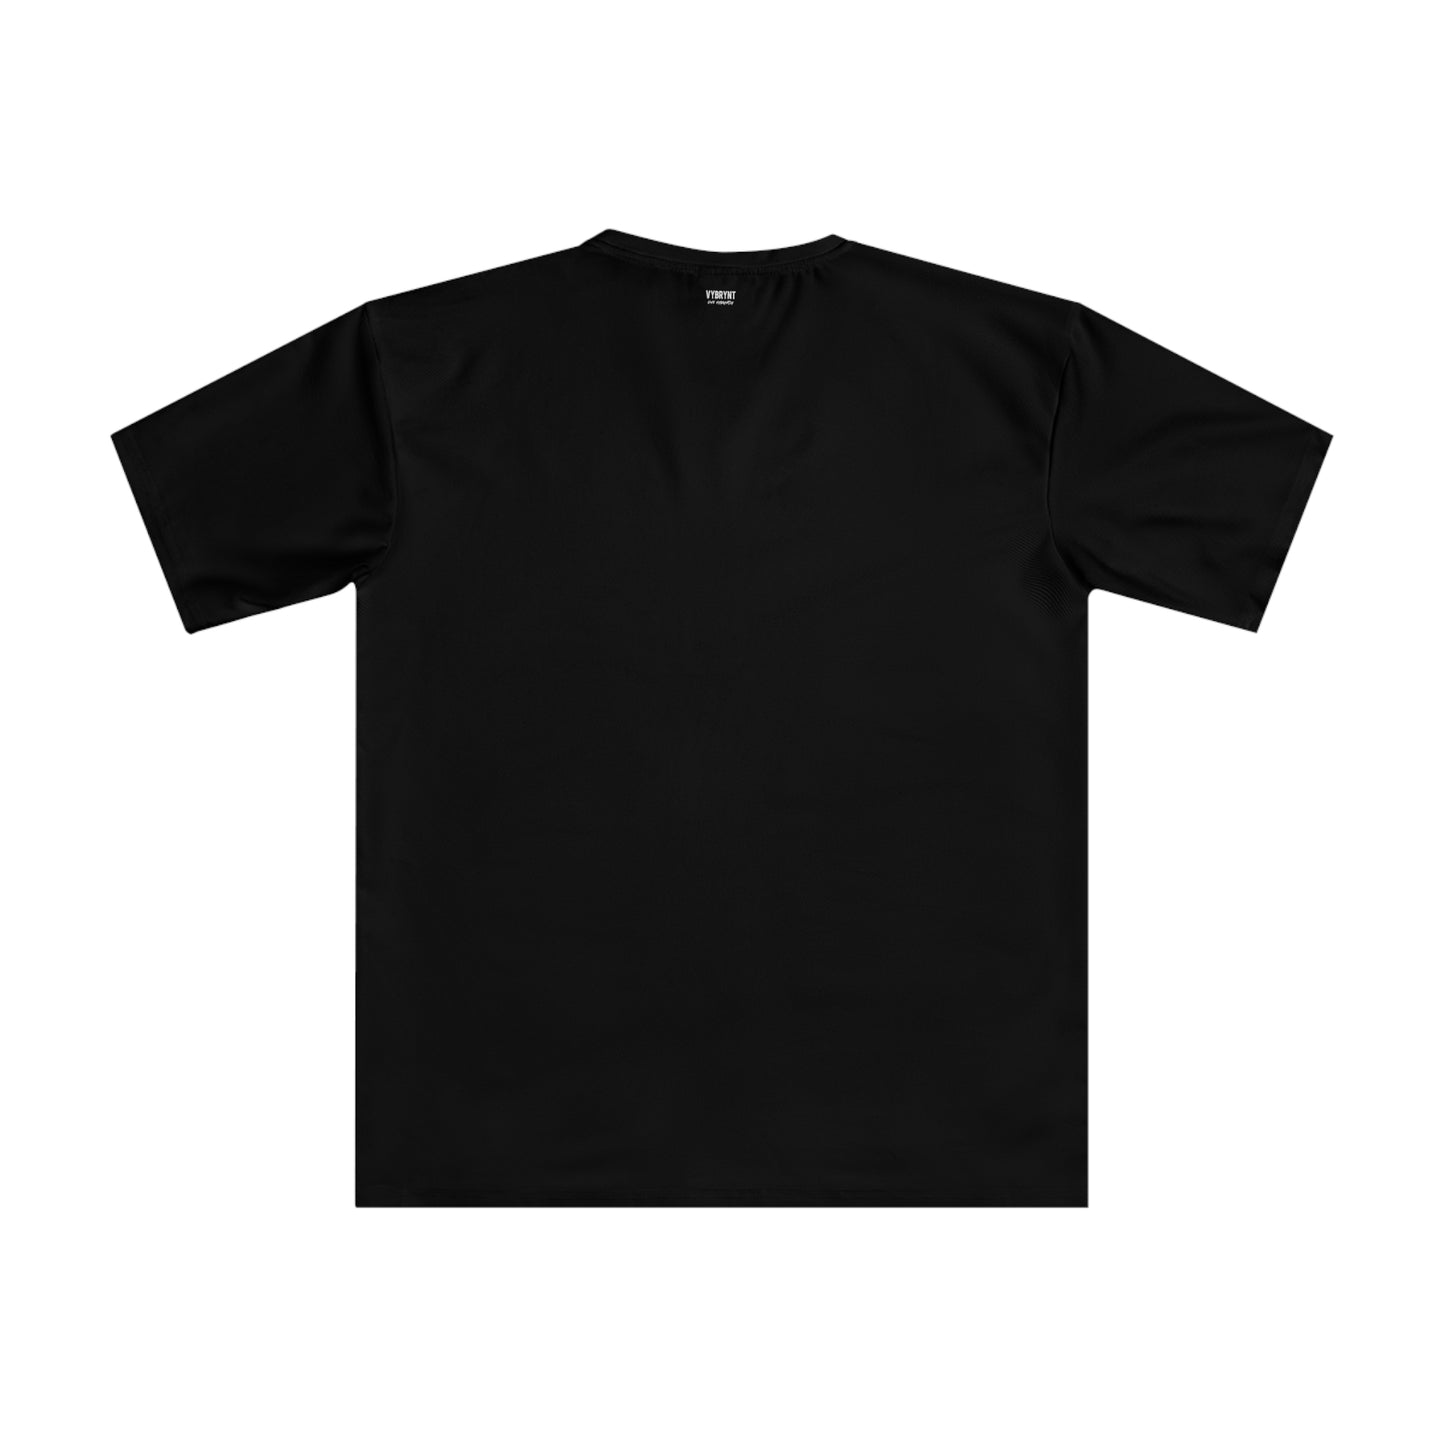 Welcome To Harlem Men's Black T-shirt